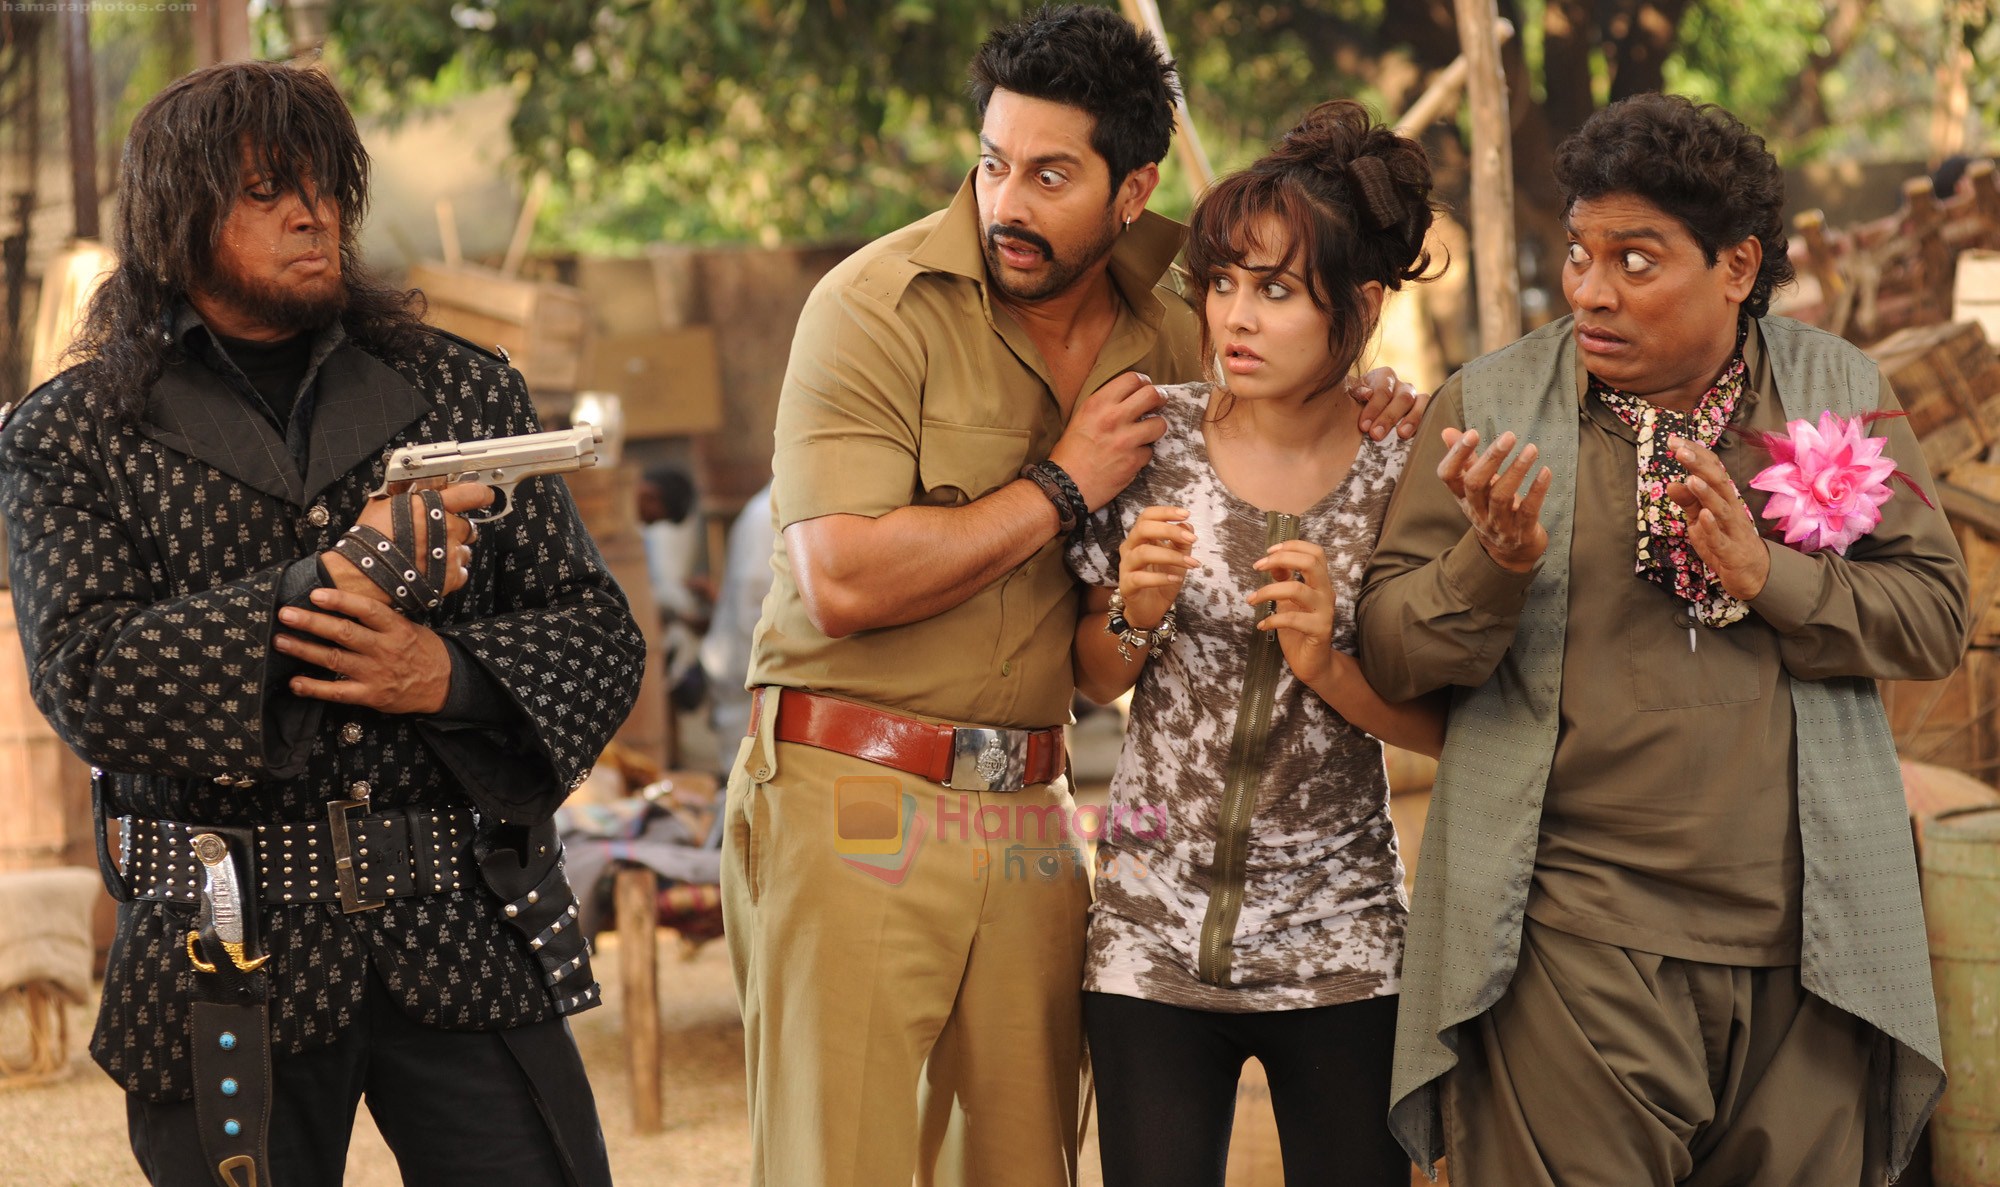 Aftab Shivdasani, Gulshan Grover, Priyanka Kothari, Johnny Lever in Still from the movie Bin Bulaye Baraati